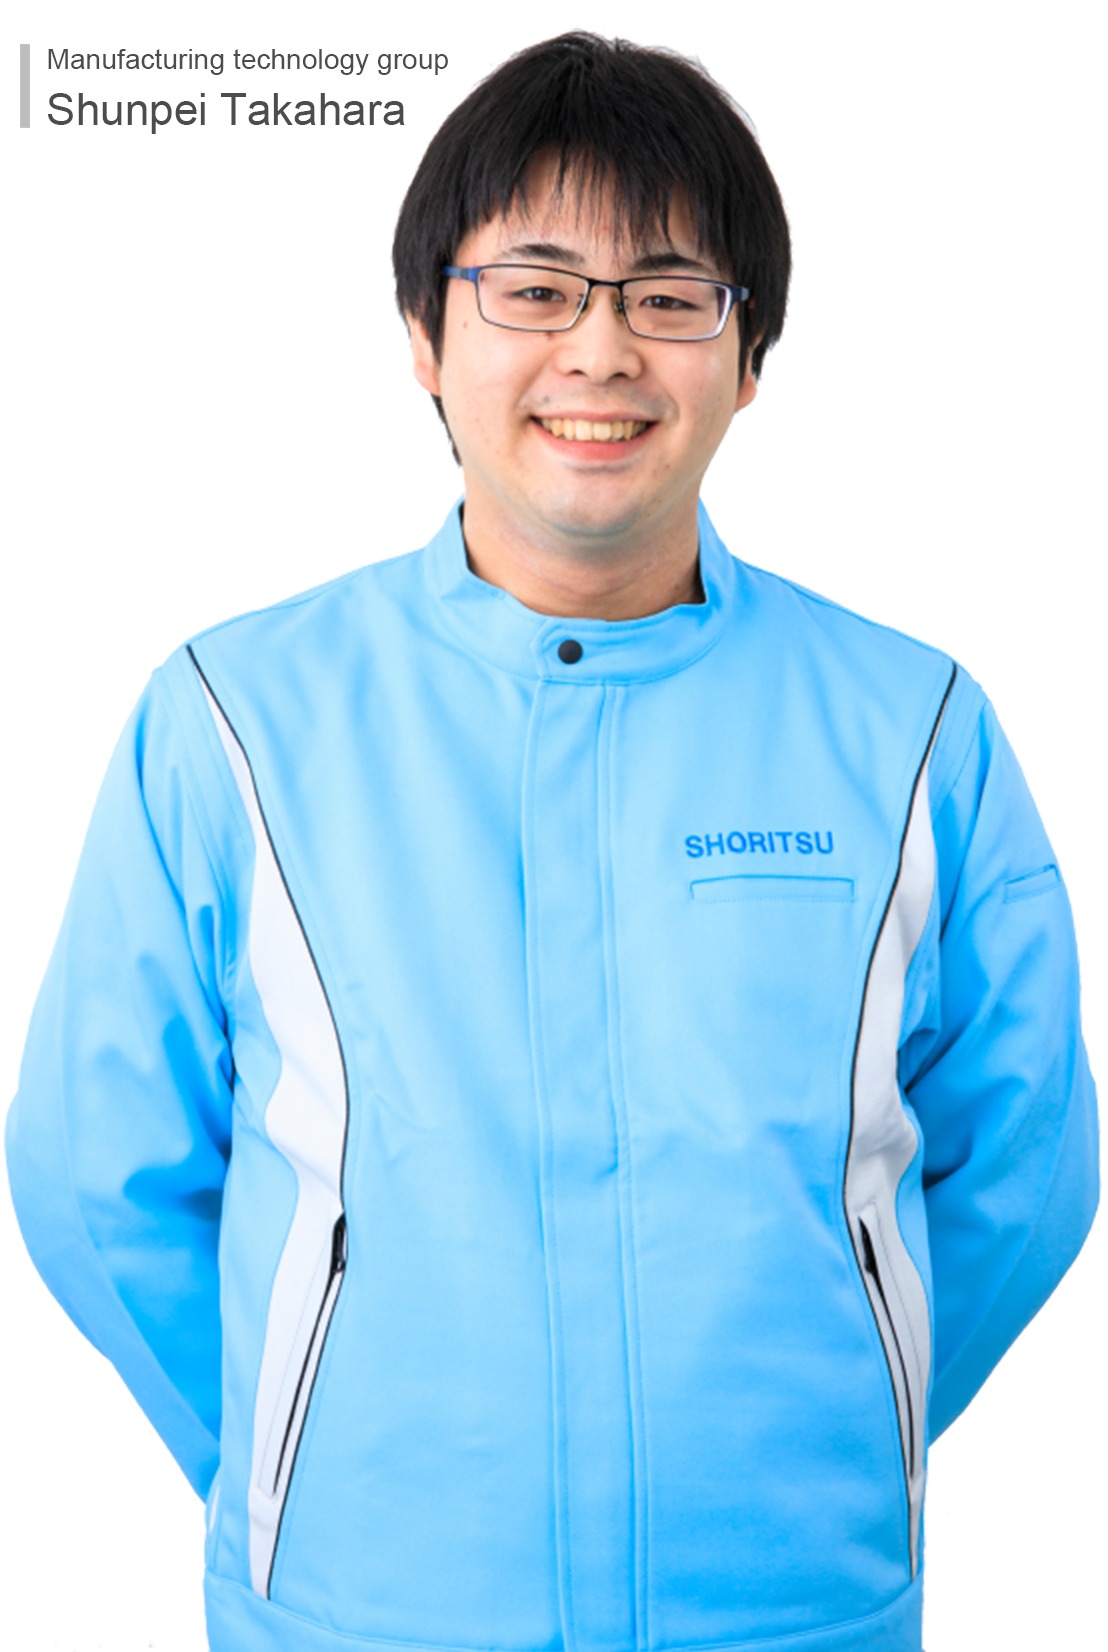 Manufacturing technology group Shunpei Takahara